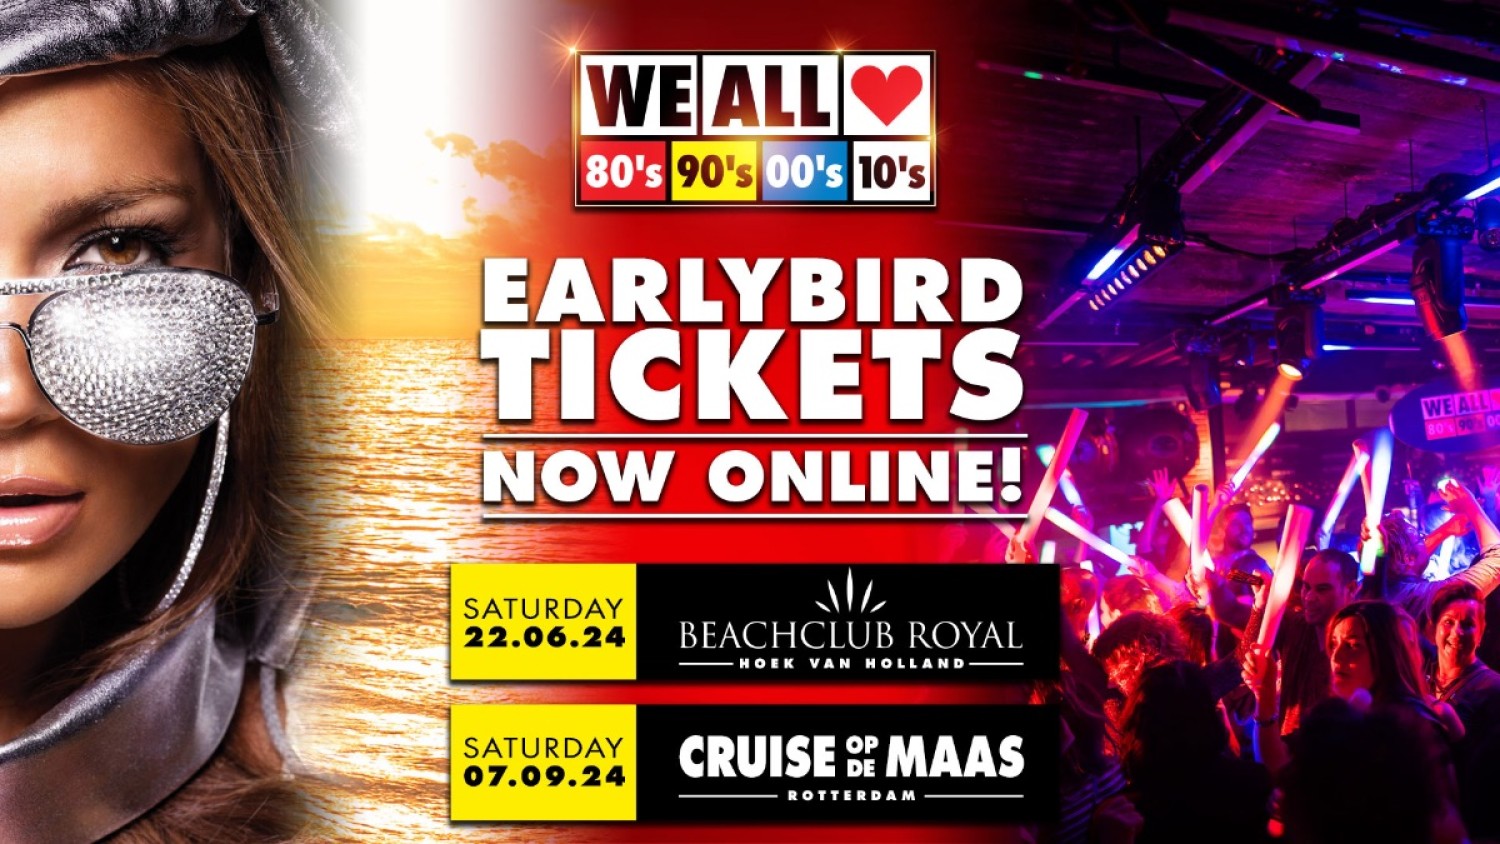 Party nieuws: Tickets Beachclub Royal en Wereldhavendagen Cruise Rotterdam